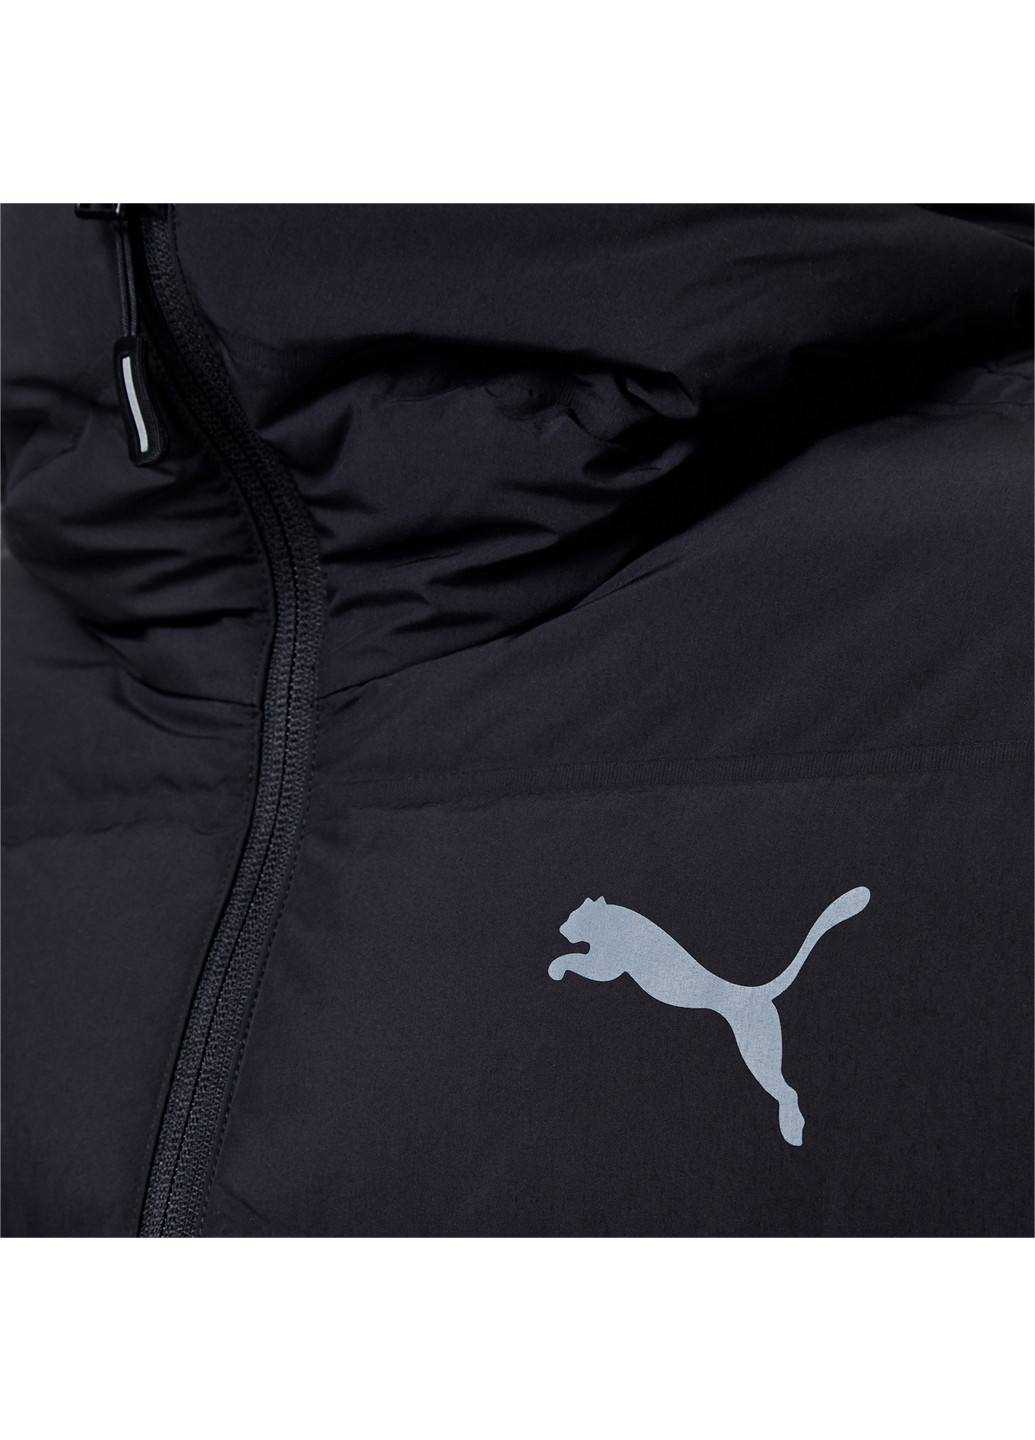 Черная демисезонная куртка downguard 600 down jacket Puma